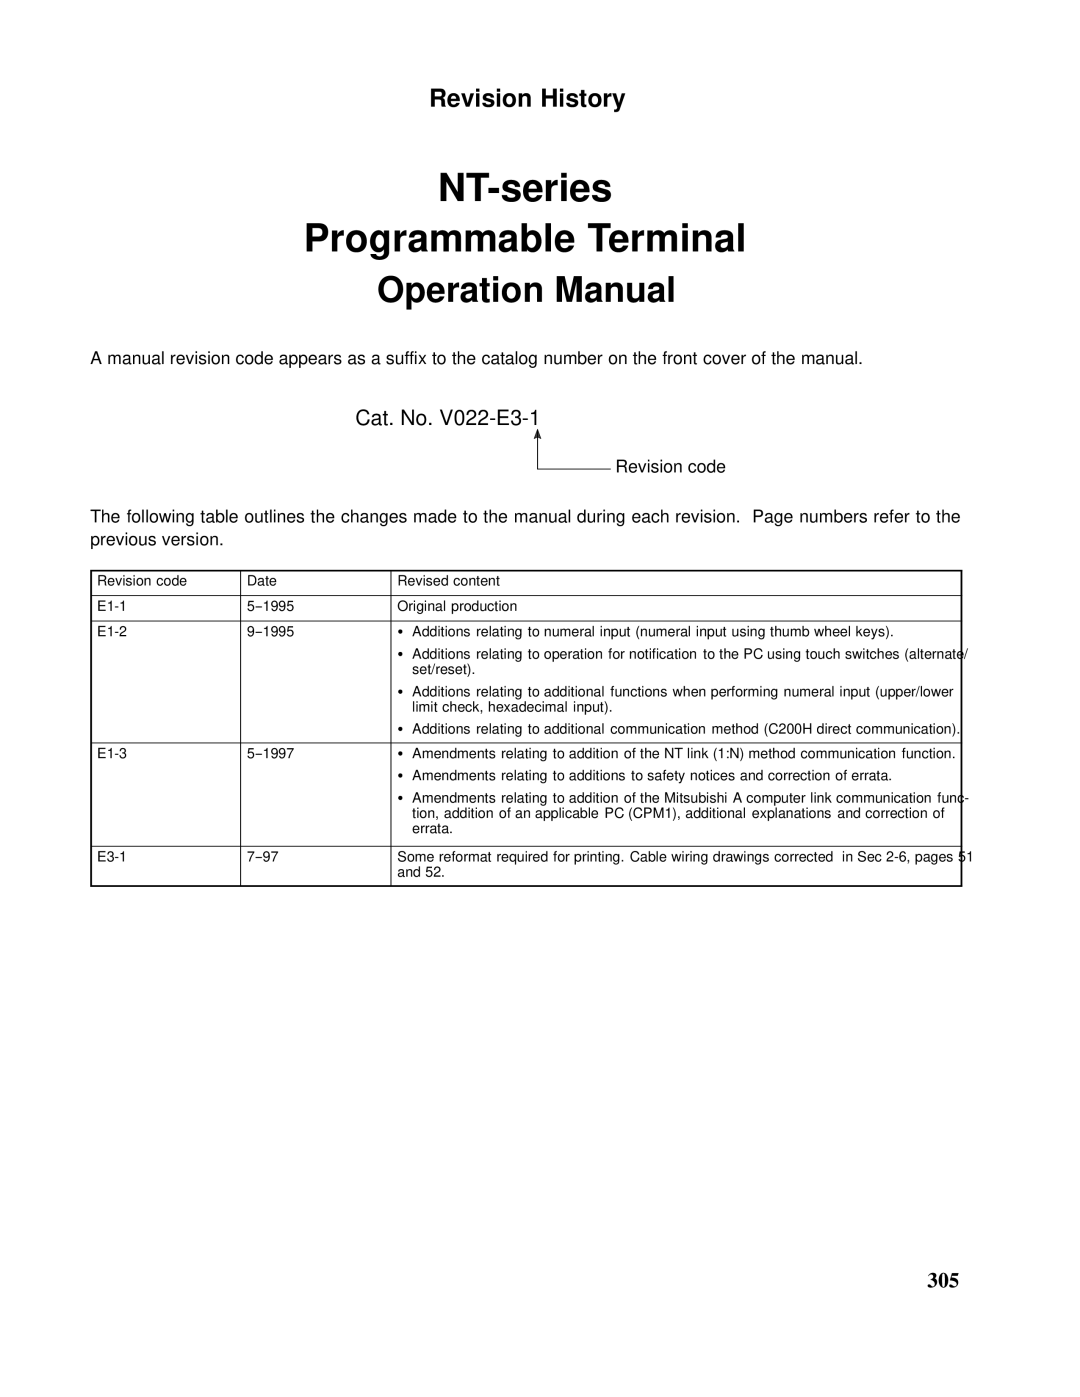 Omron V022-E3-1 operation manual NT-series Programmable Terminal, Revision History, Operation Manual 